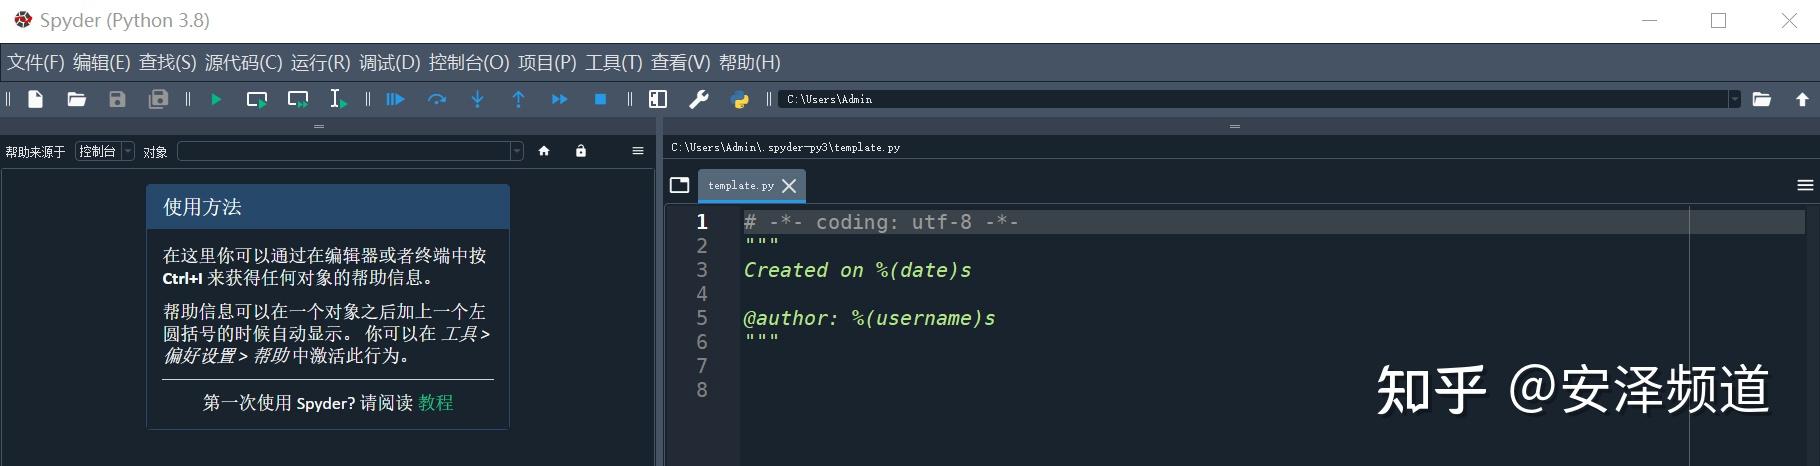 python3教程002:怎么个性化定制python3的程序开发软件spyder50